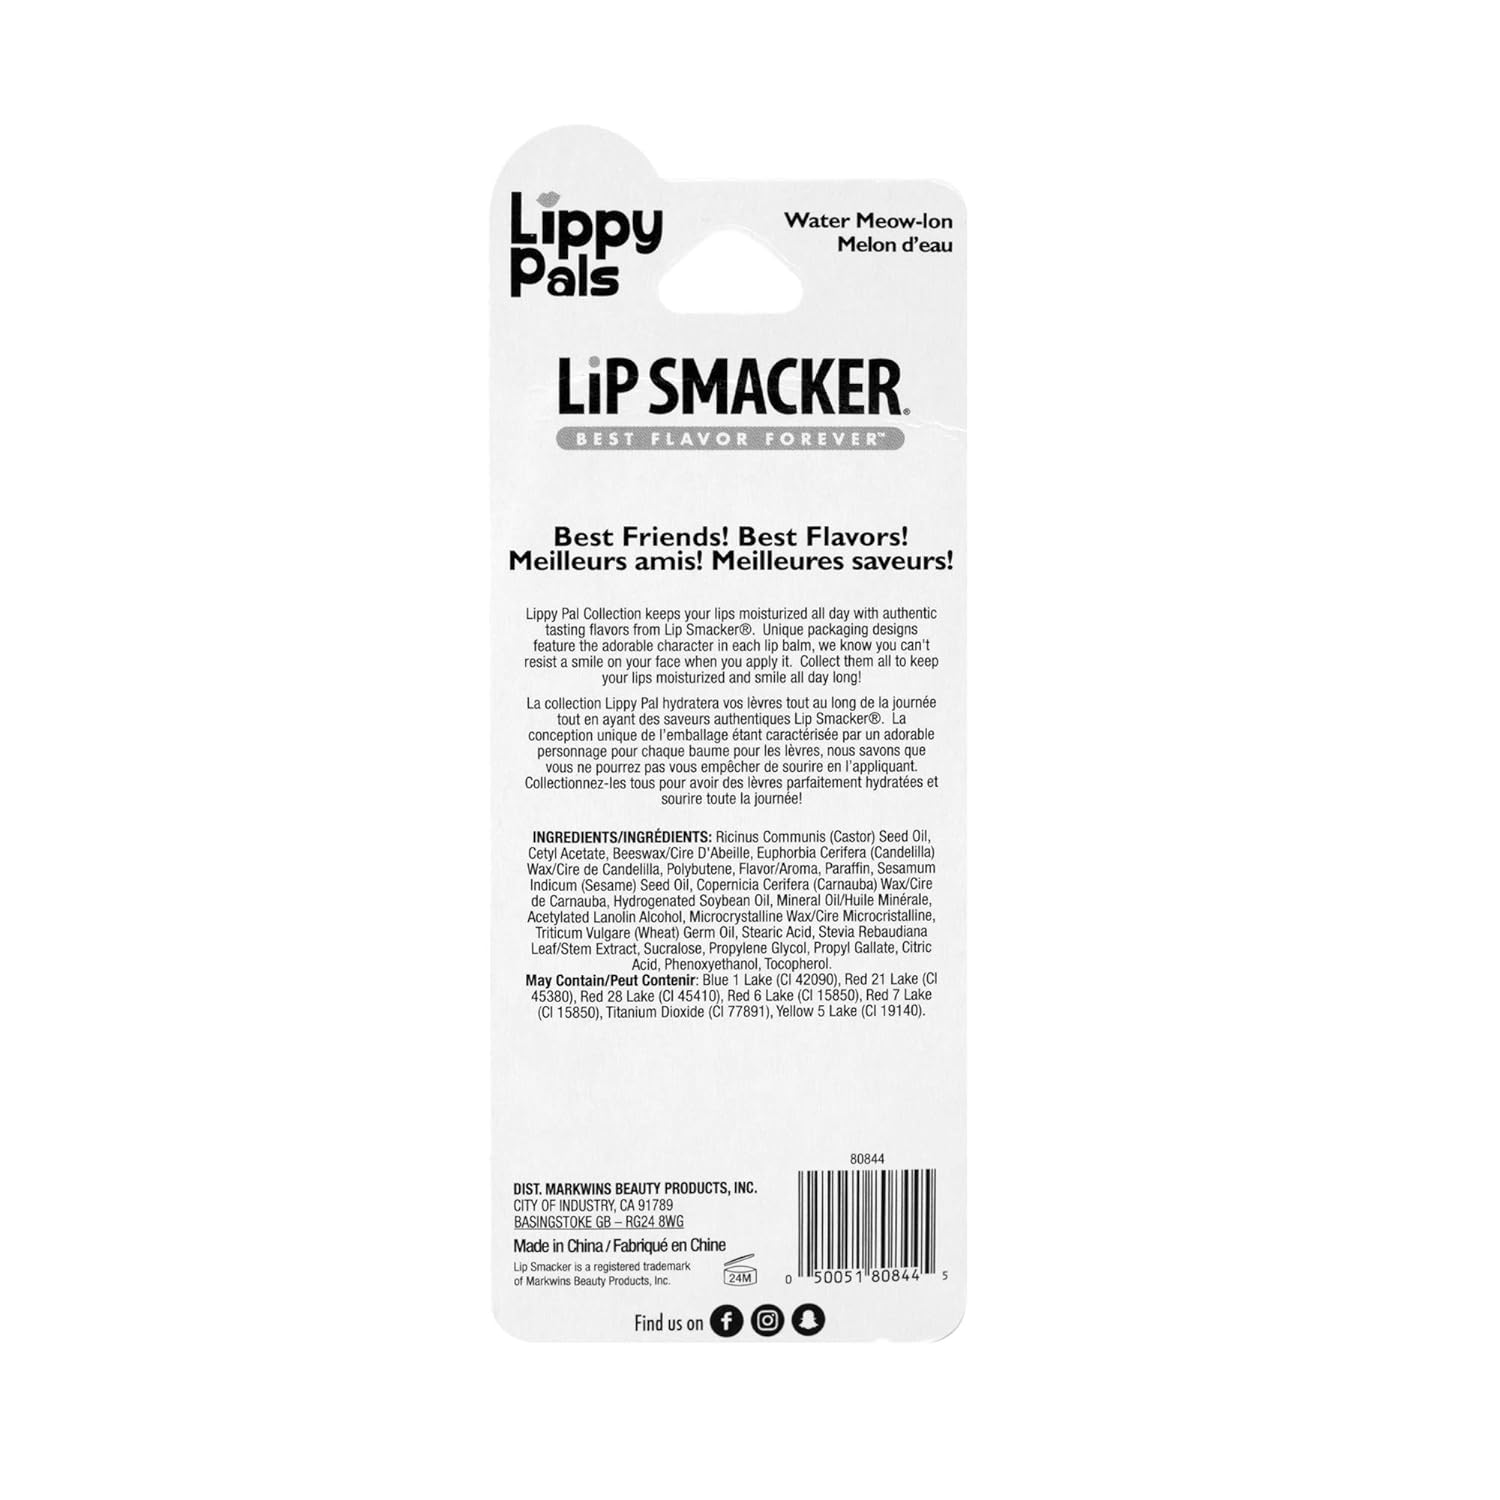 Lip Smacker Lippy Pals Kitten, Flavored Moisturizing & Smoothing Soft Shine Lip Balm, Hydrating & Protecting Fun Tasty Flavors, Cruelty-Free & Vegan - Kitten Water-Meow-lon : Beauty & Personal Care